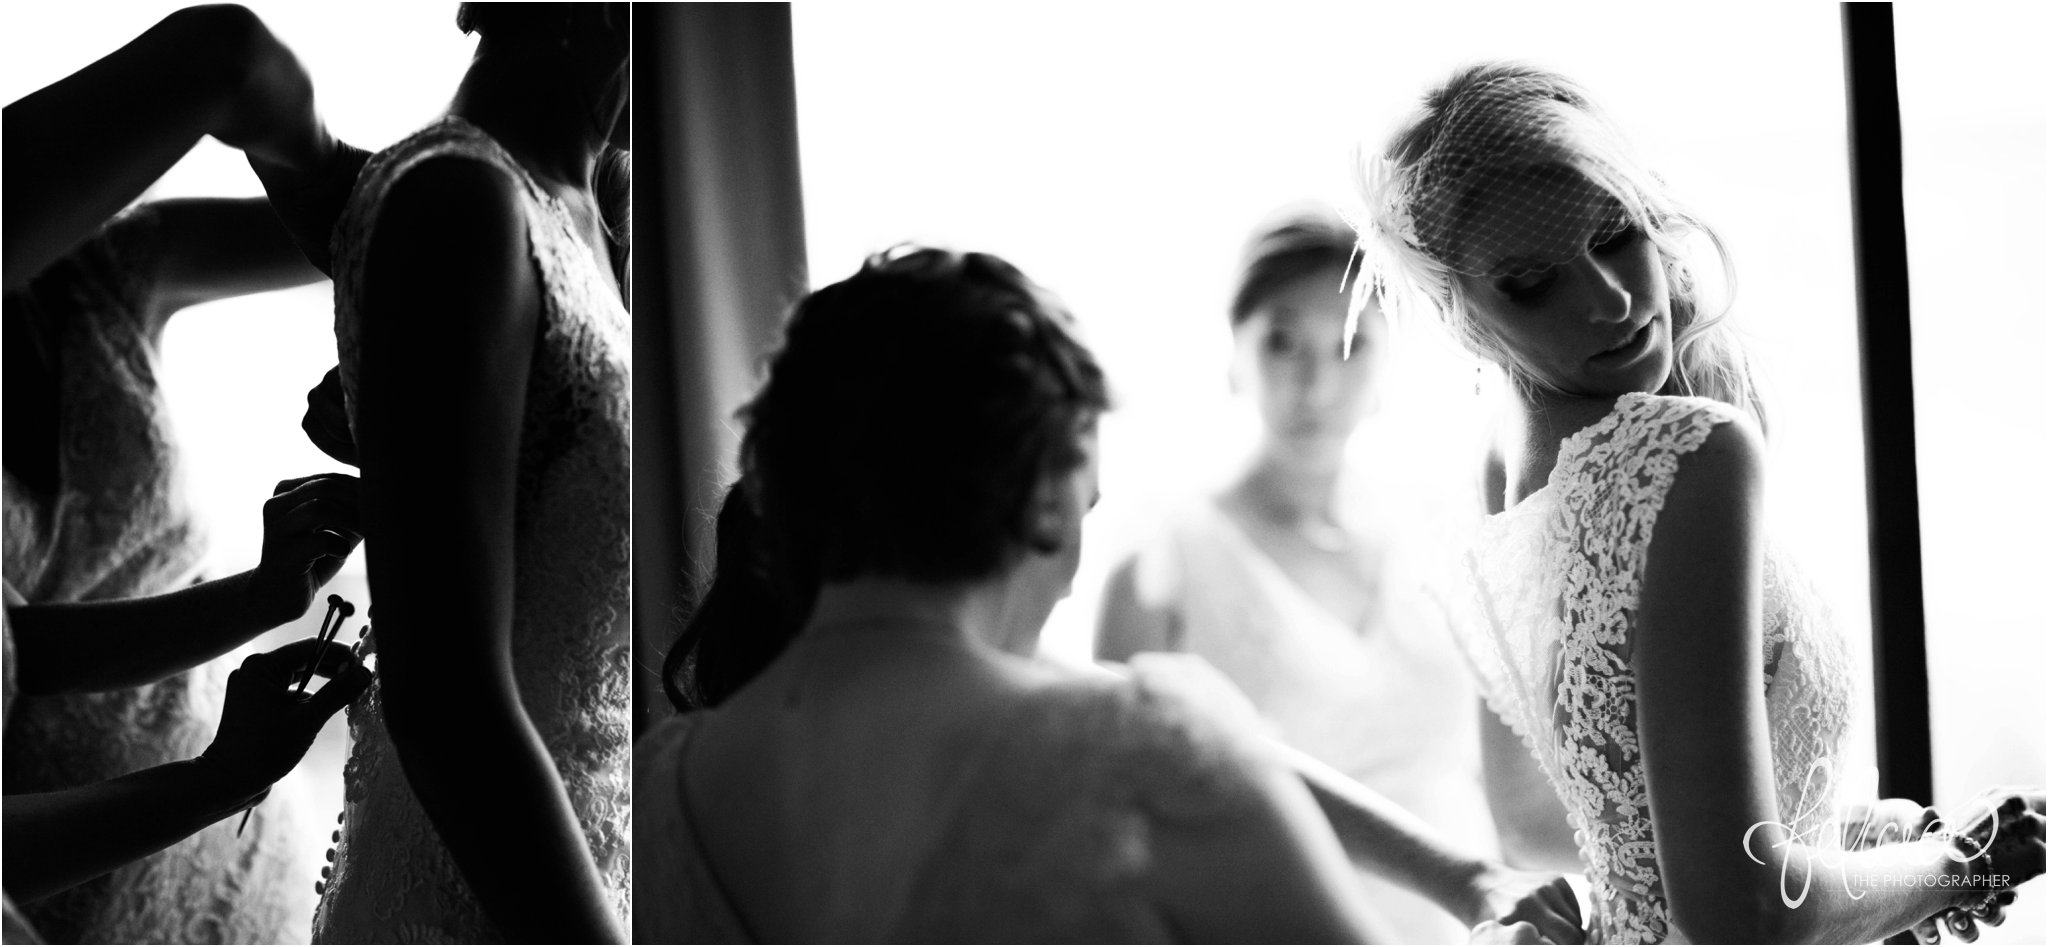 Bride Getting Ready | silhouette| Black and White | Felicia The Photographer | Maggie Soterro Melanie | Kansas City